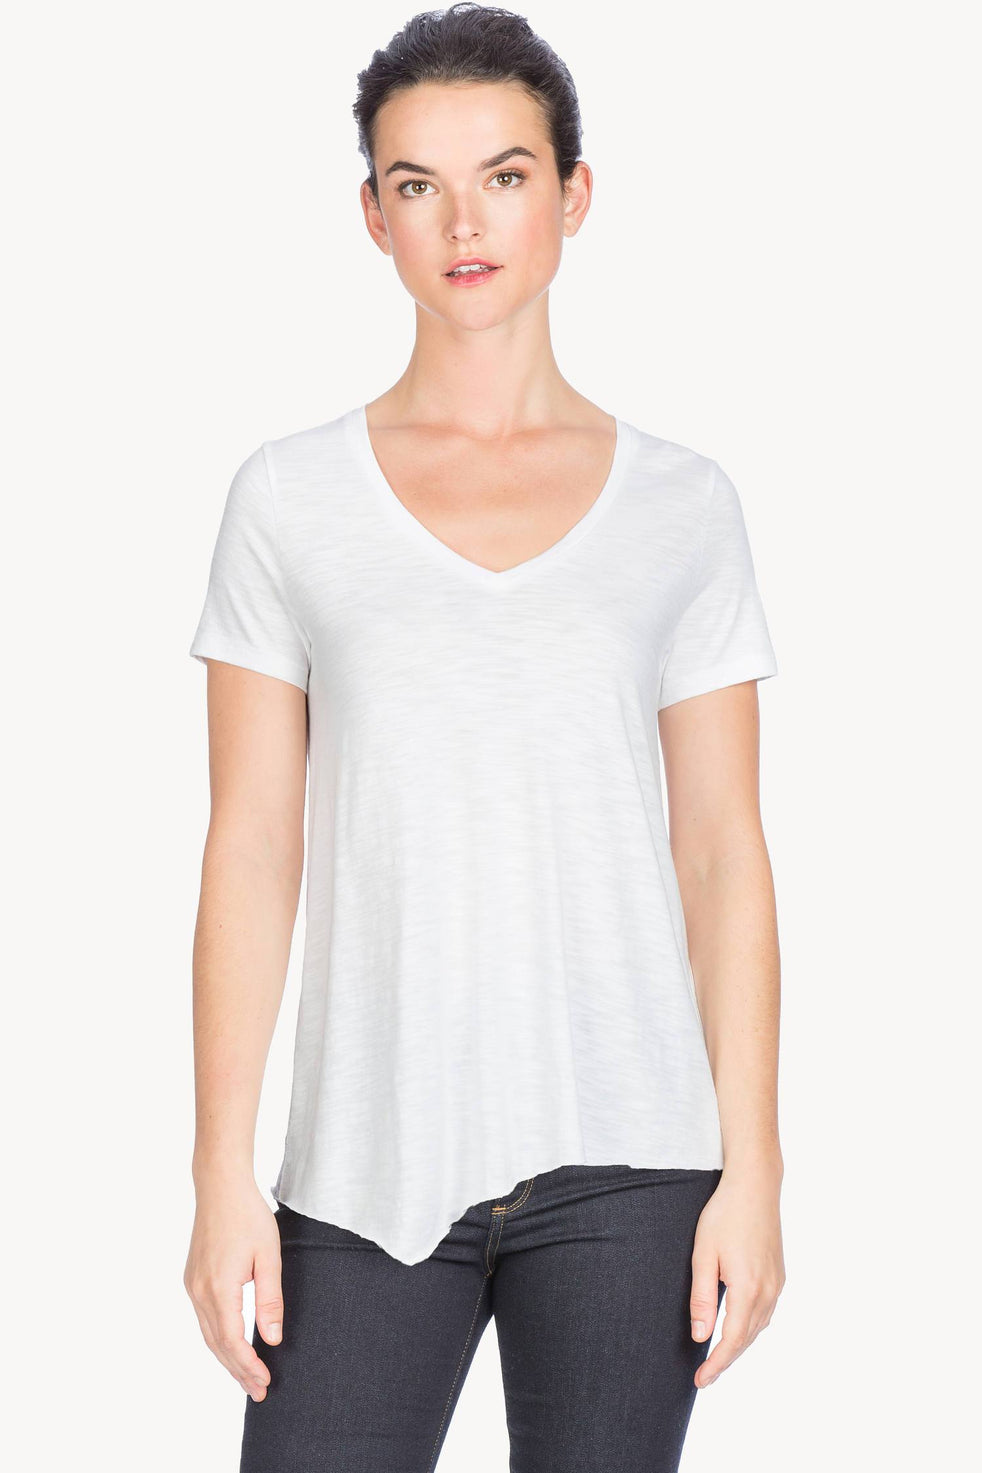 & Short Long Women for Sleeve | Women\'s on Shirts Tops Sale Cotton